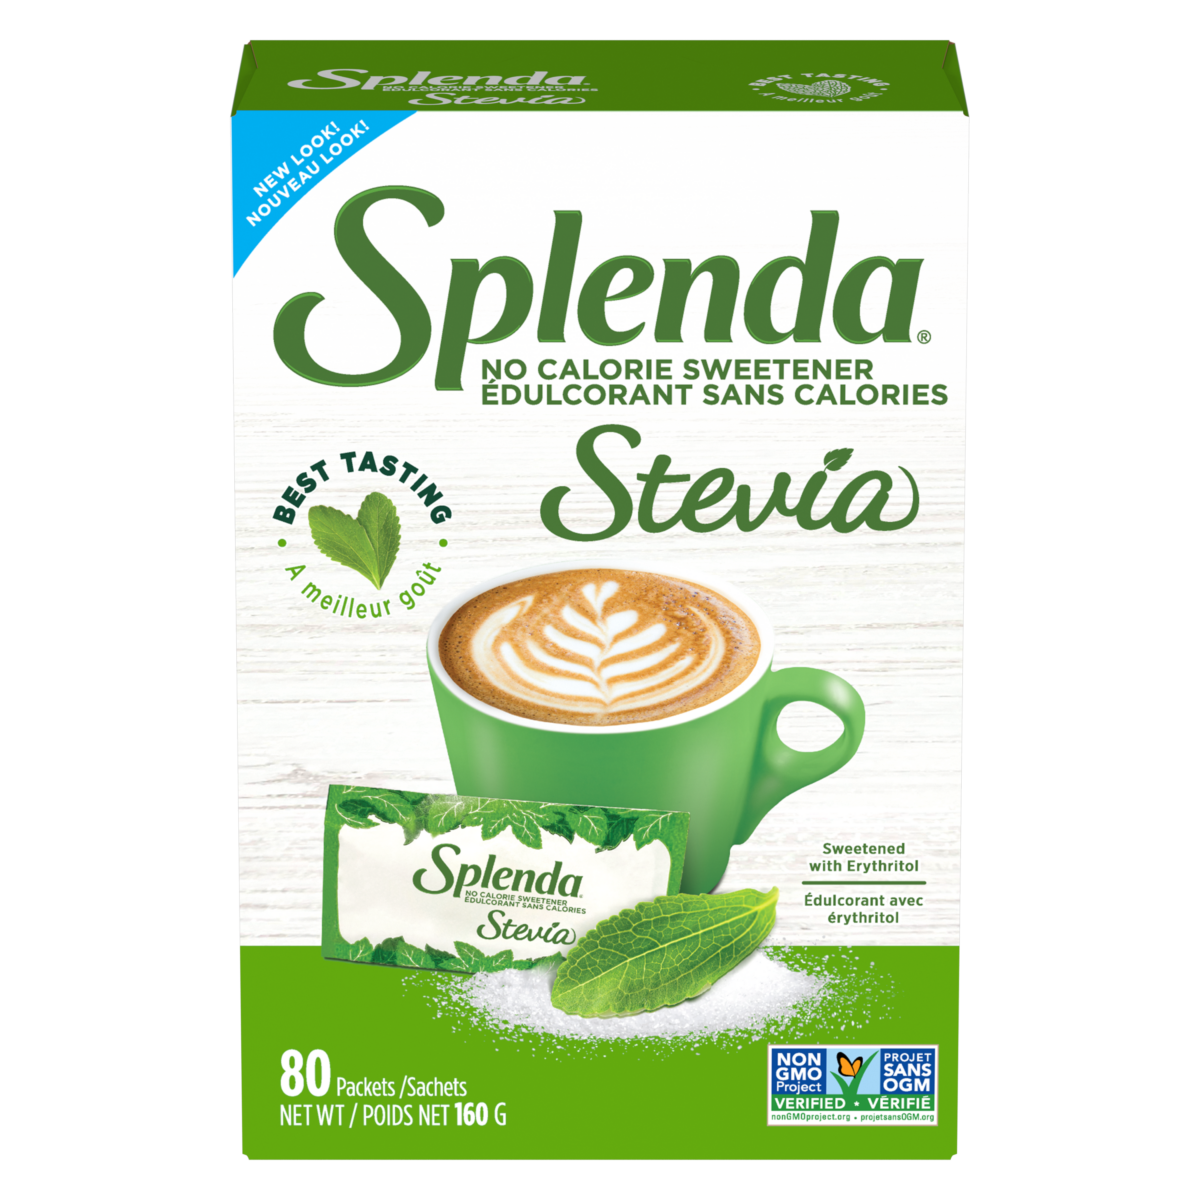 Splenda Stevia Packets - Front